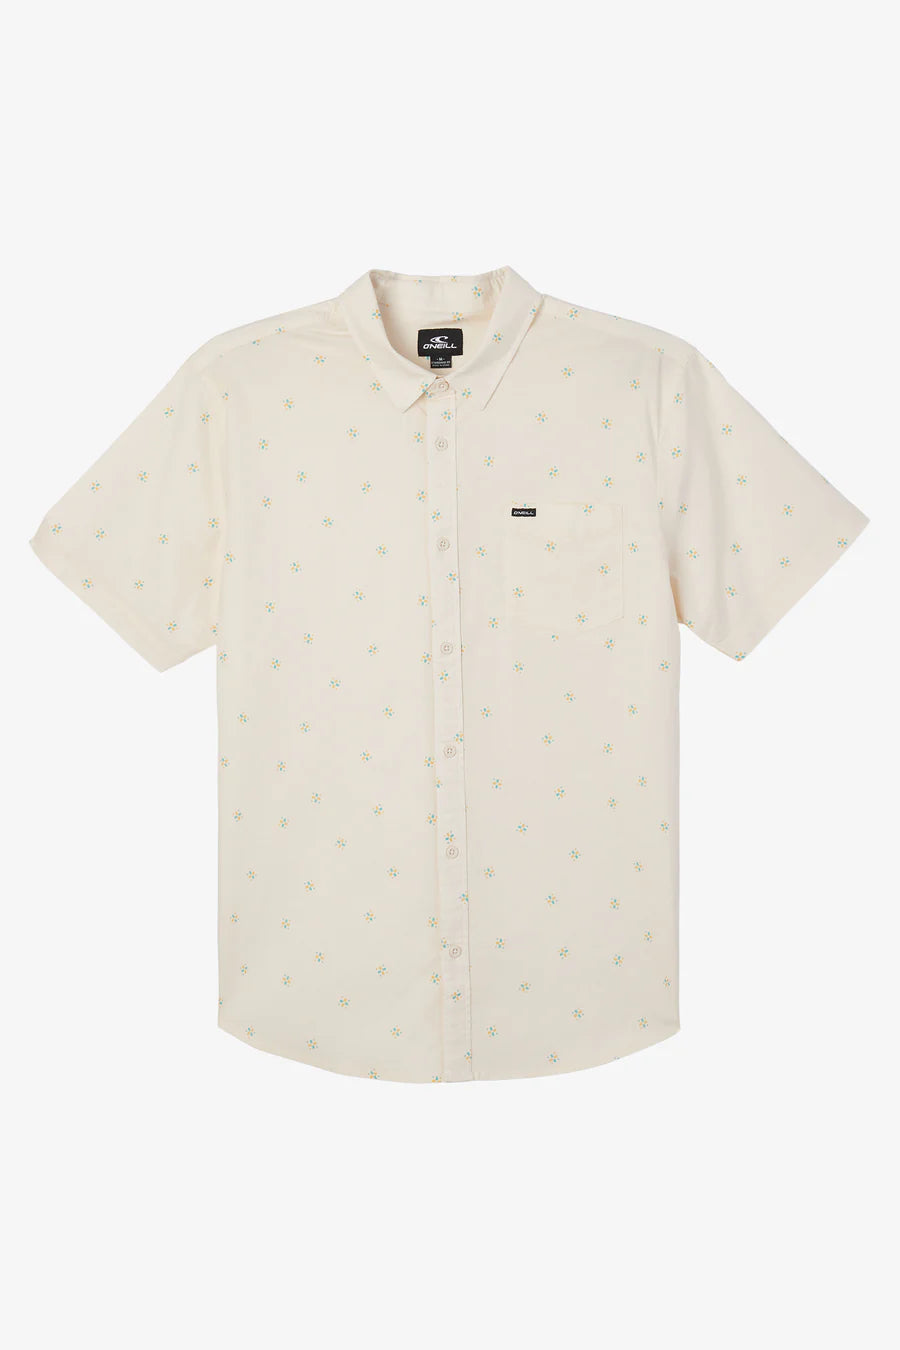 Quiver Stretch Modern Short Sleeve Button-Down Shirt - Cream